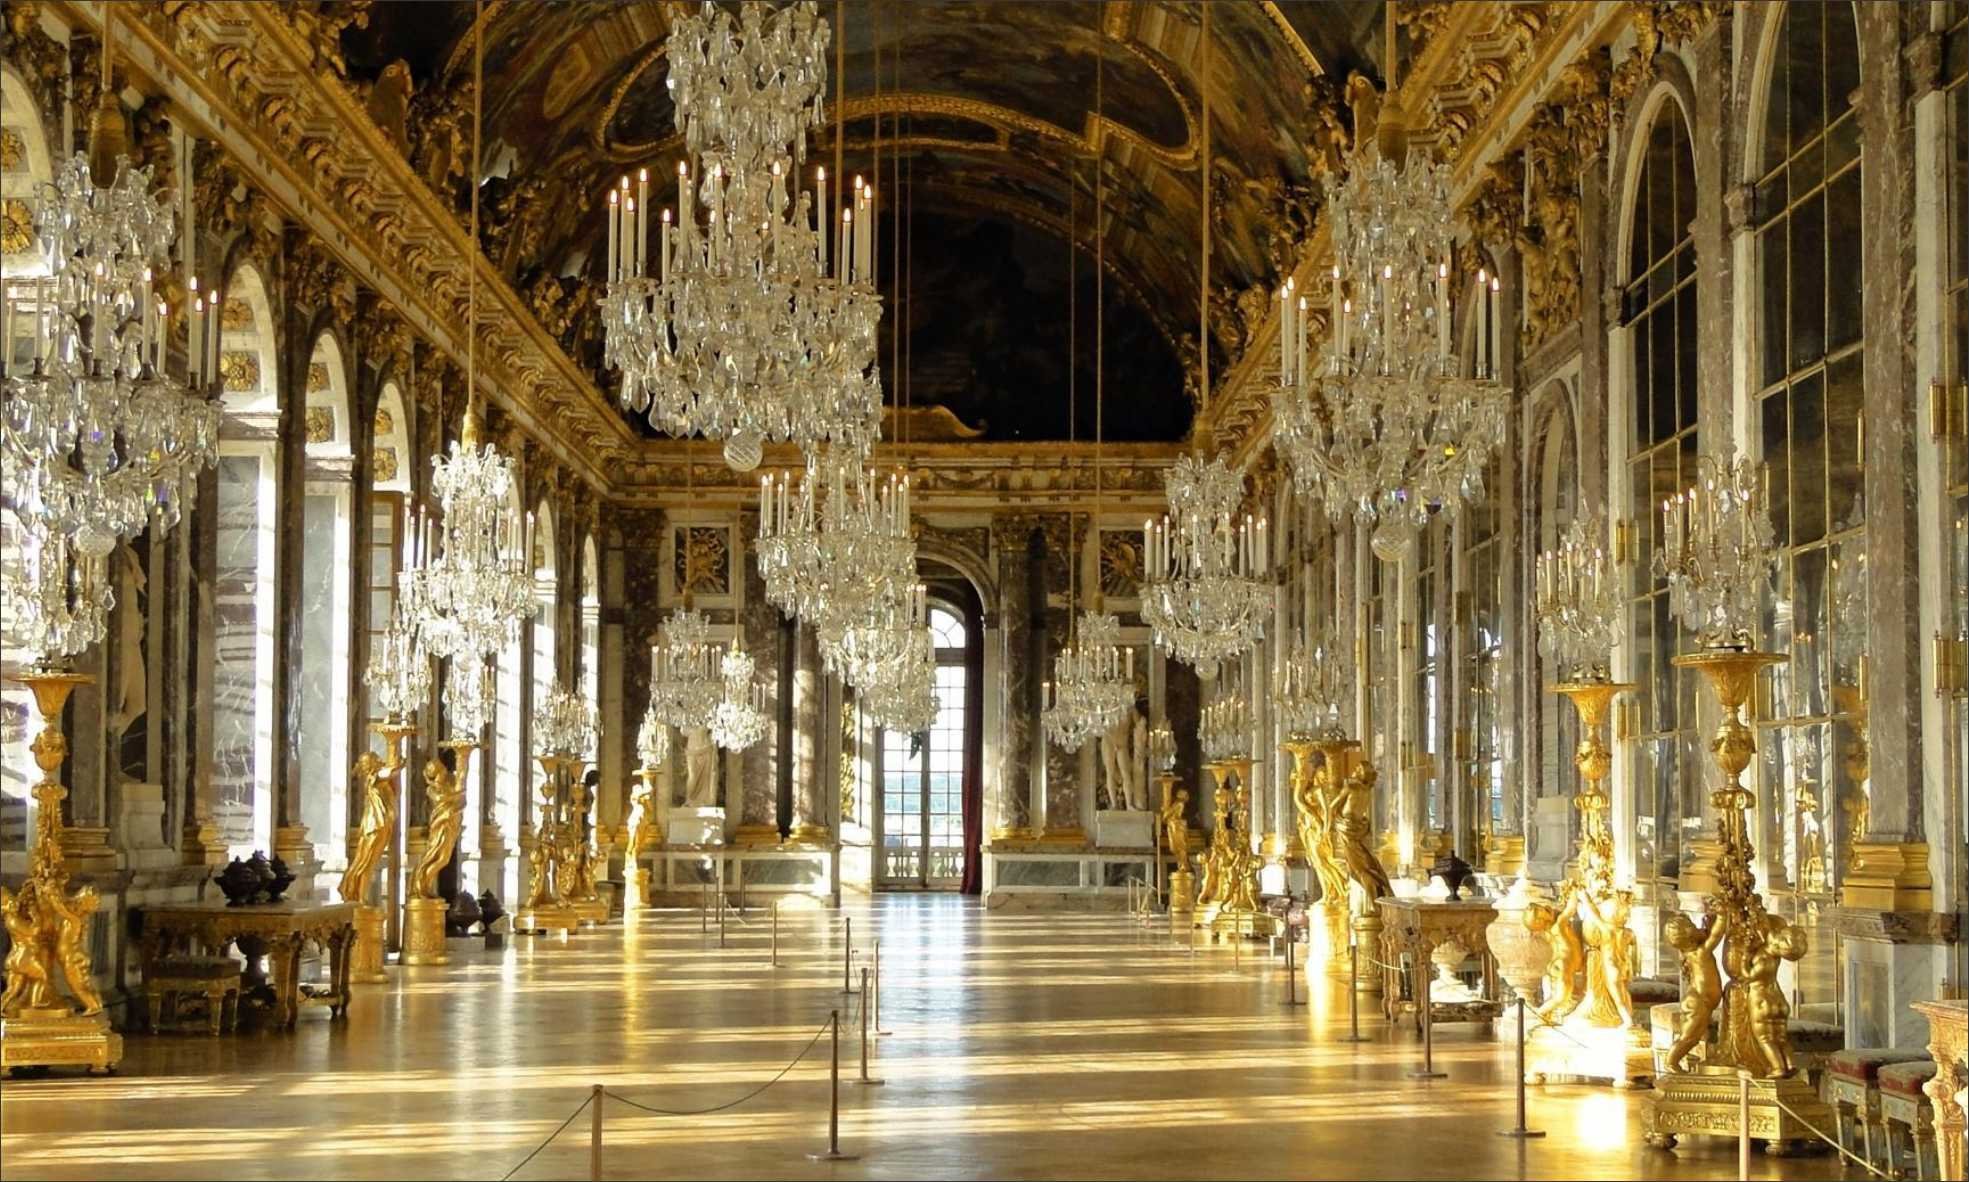 Галереи версаля. Зеркальная галерея Версаль. Версальский дворец бальный зал. Версаль Франция зеркальная галерея. Зеркальная комната в Версале.